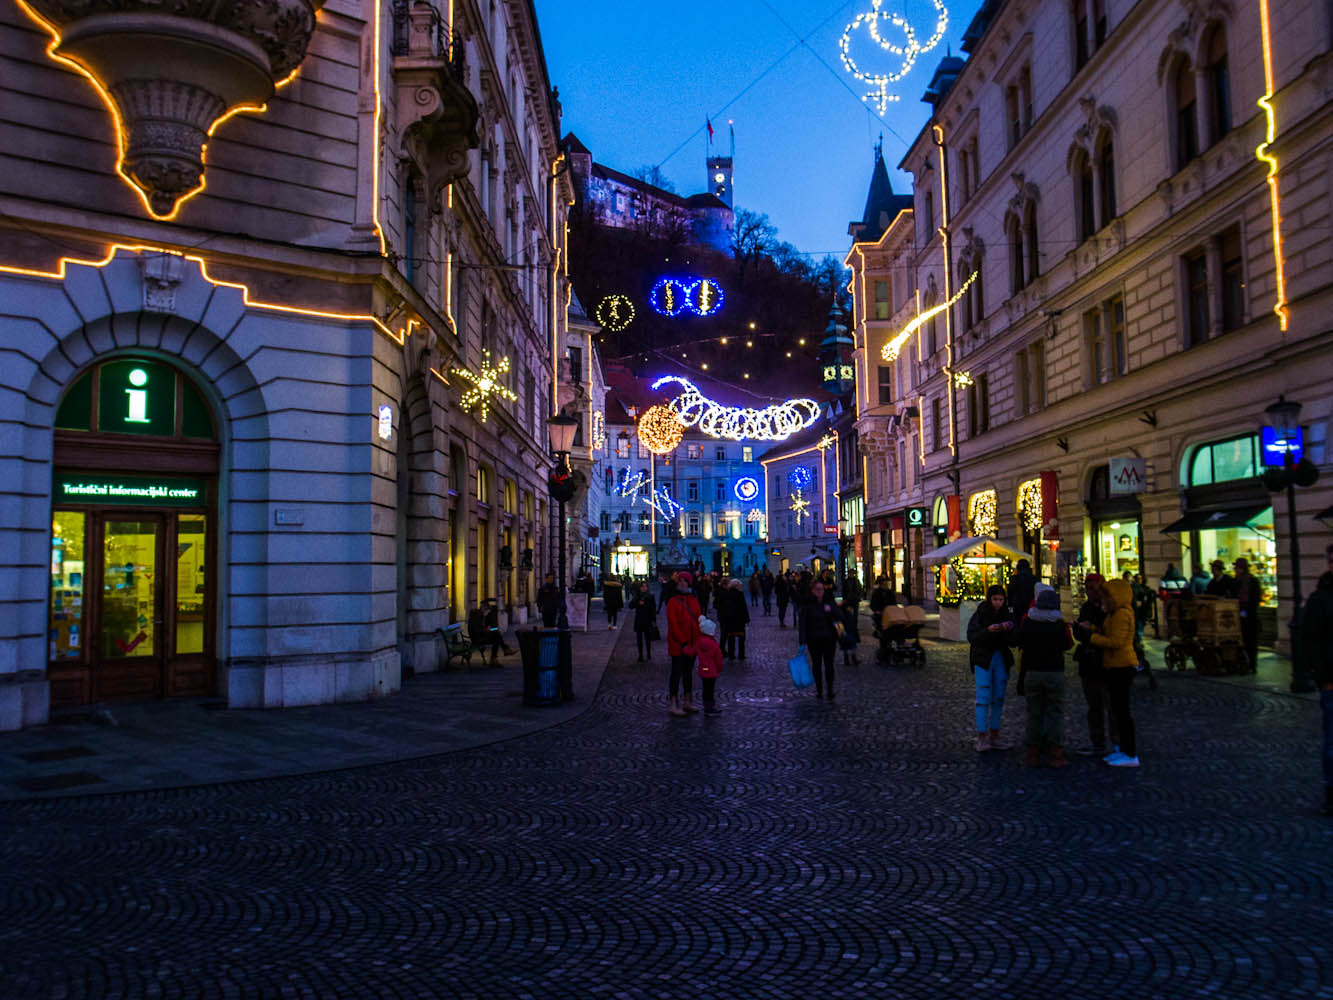 Kerstmarkt Ljubljana Kerstreis Advent